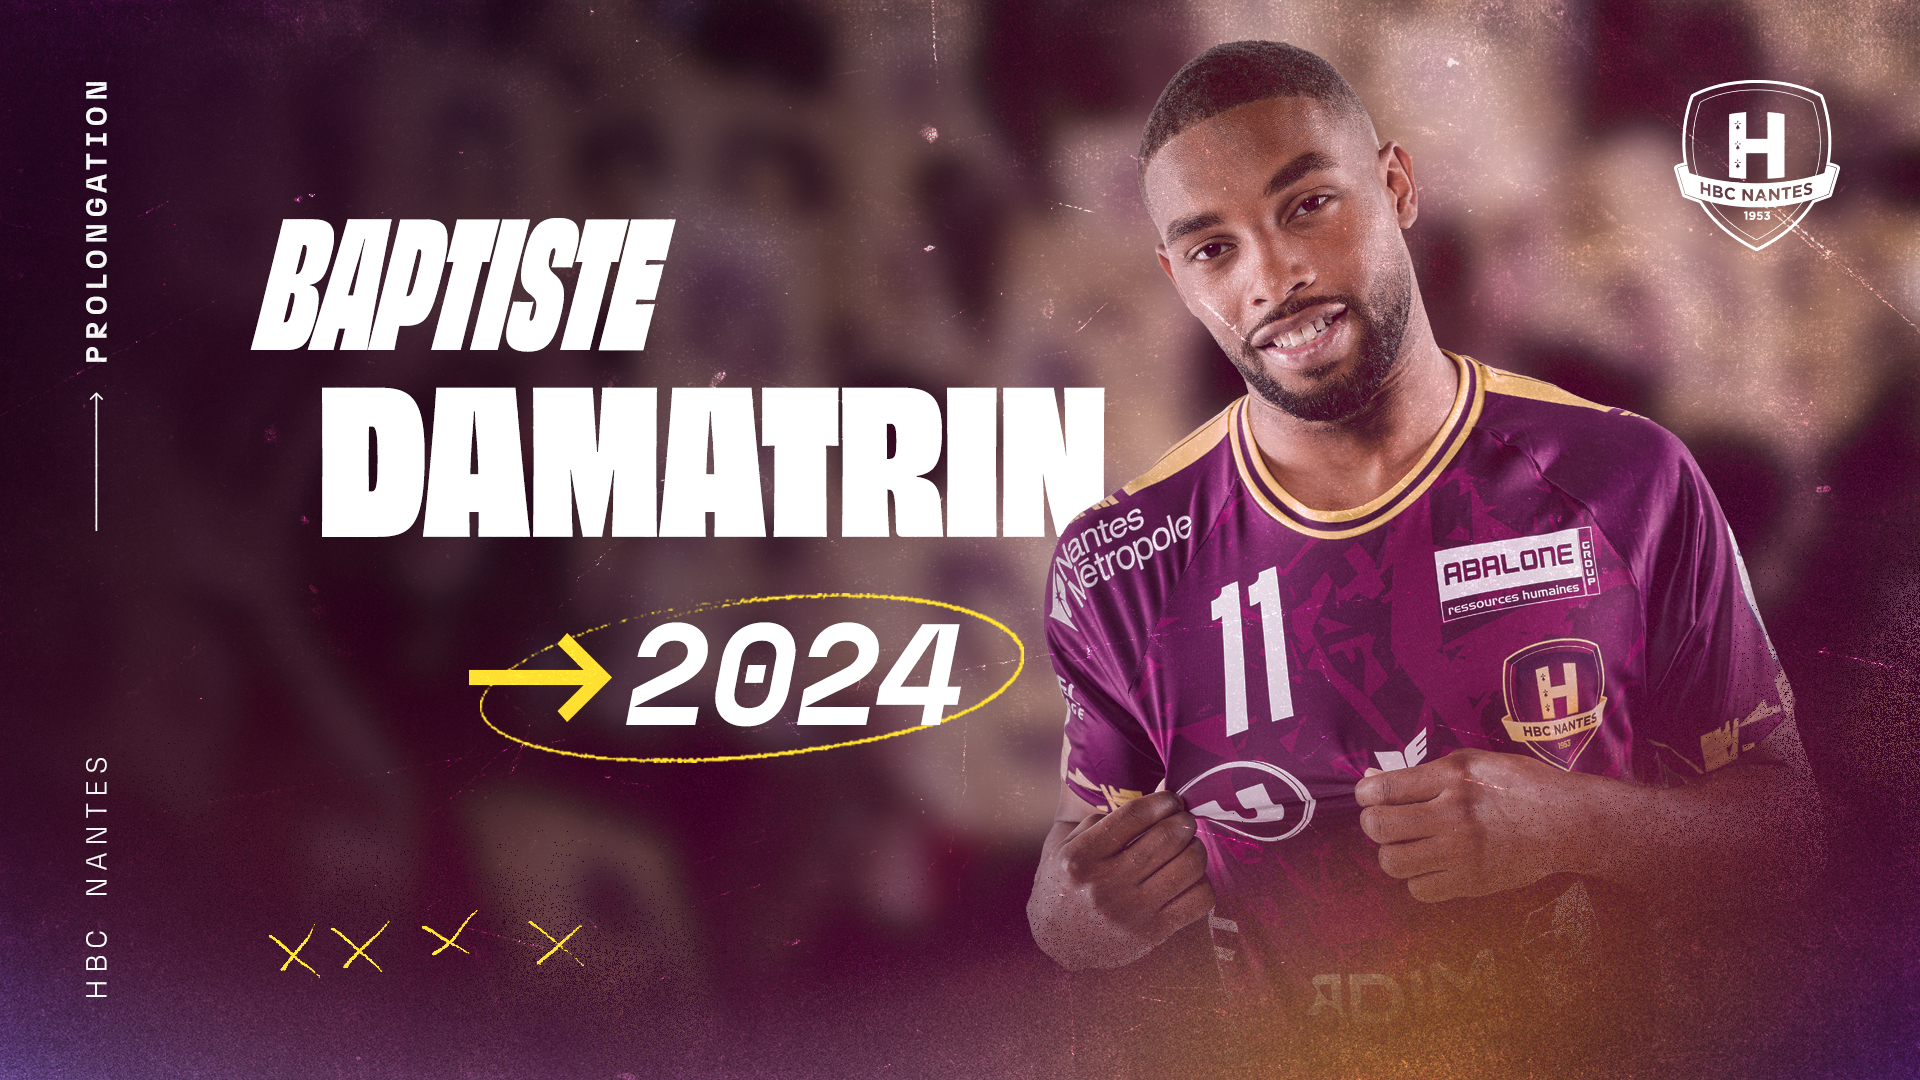 Baptiste Damatrin prolonge au HBC Nantes jusqu'en 2024!